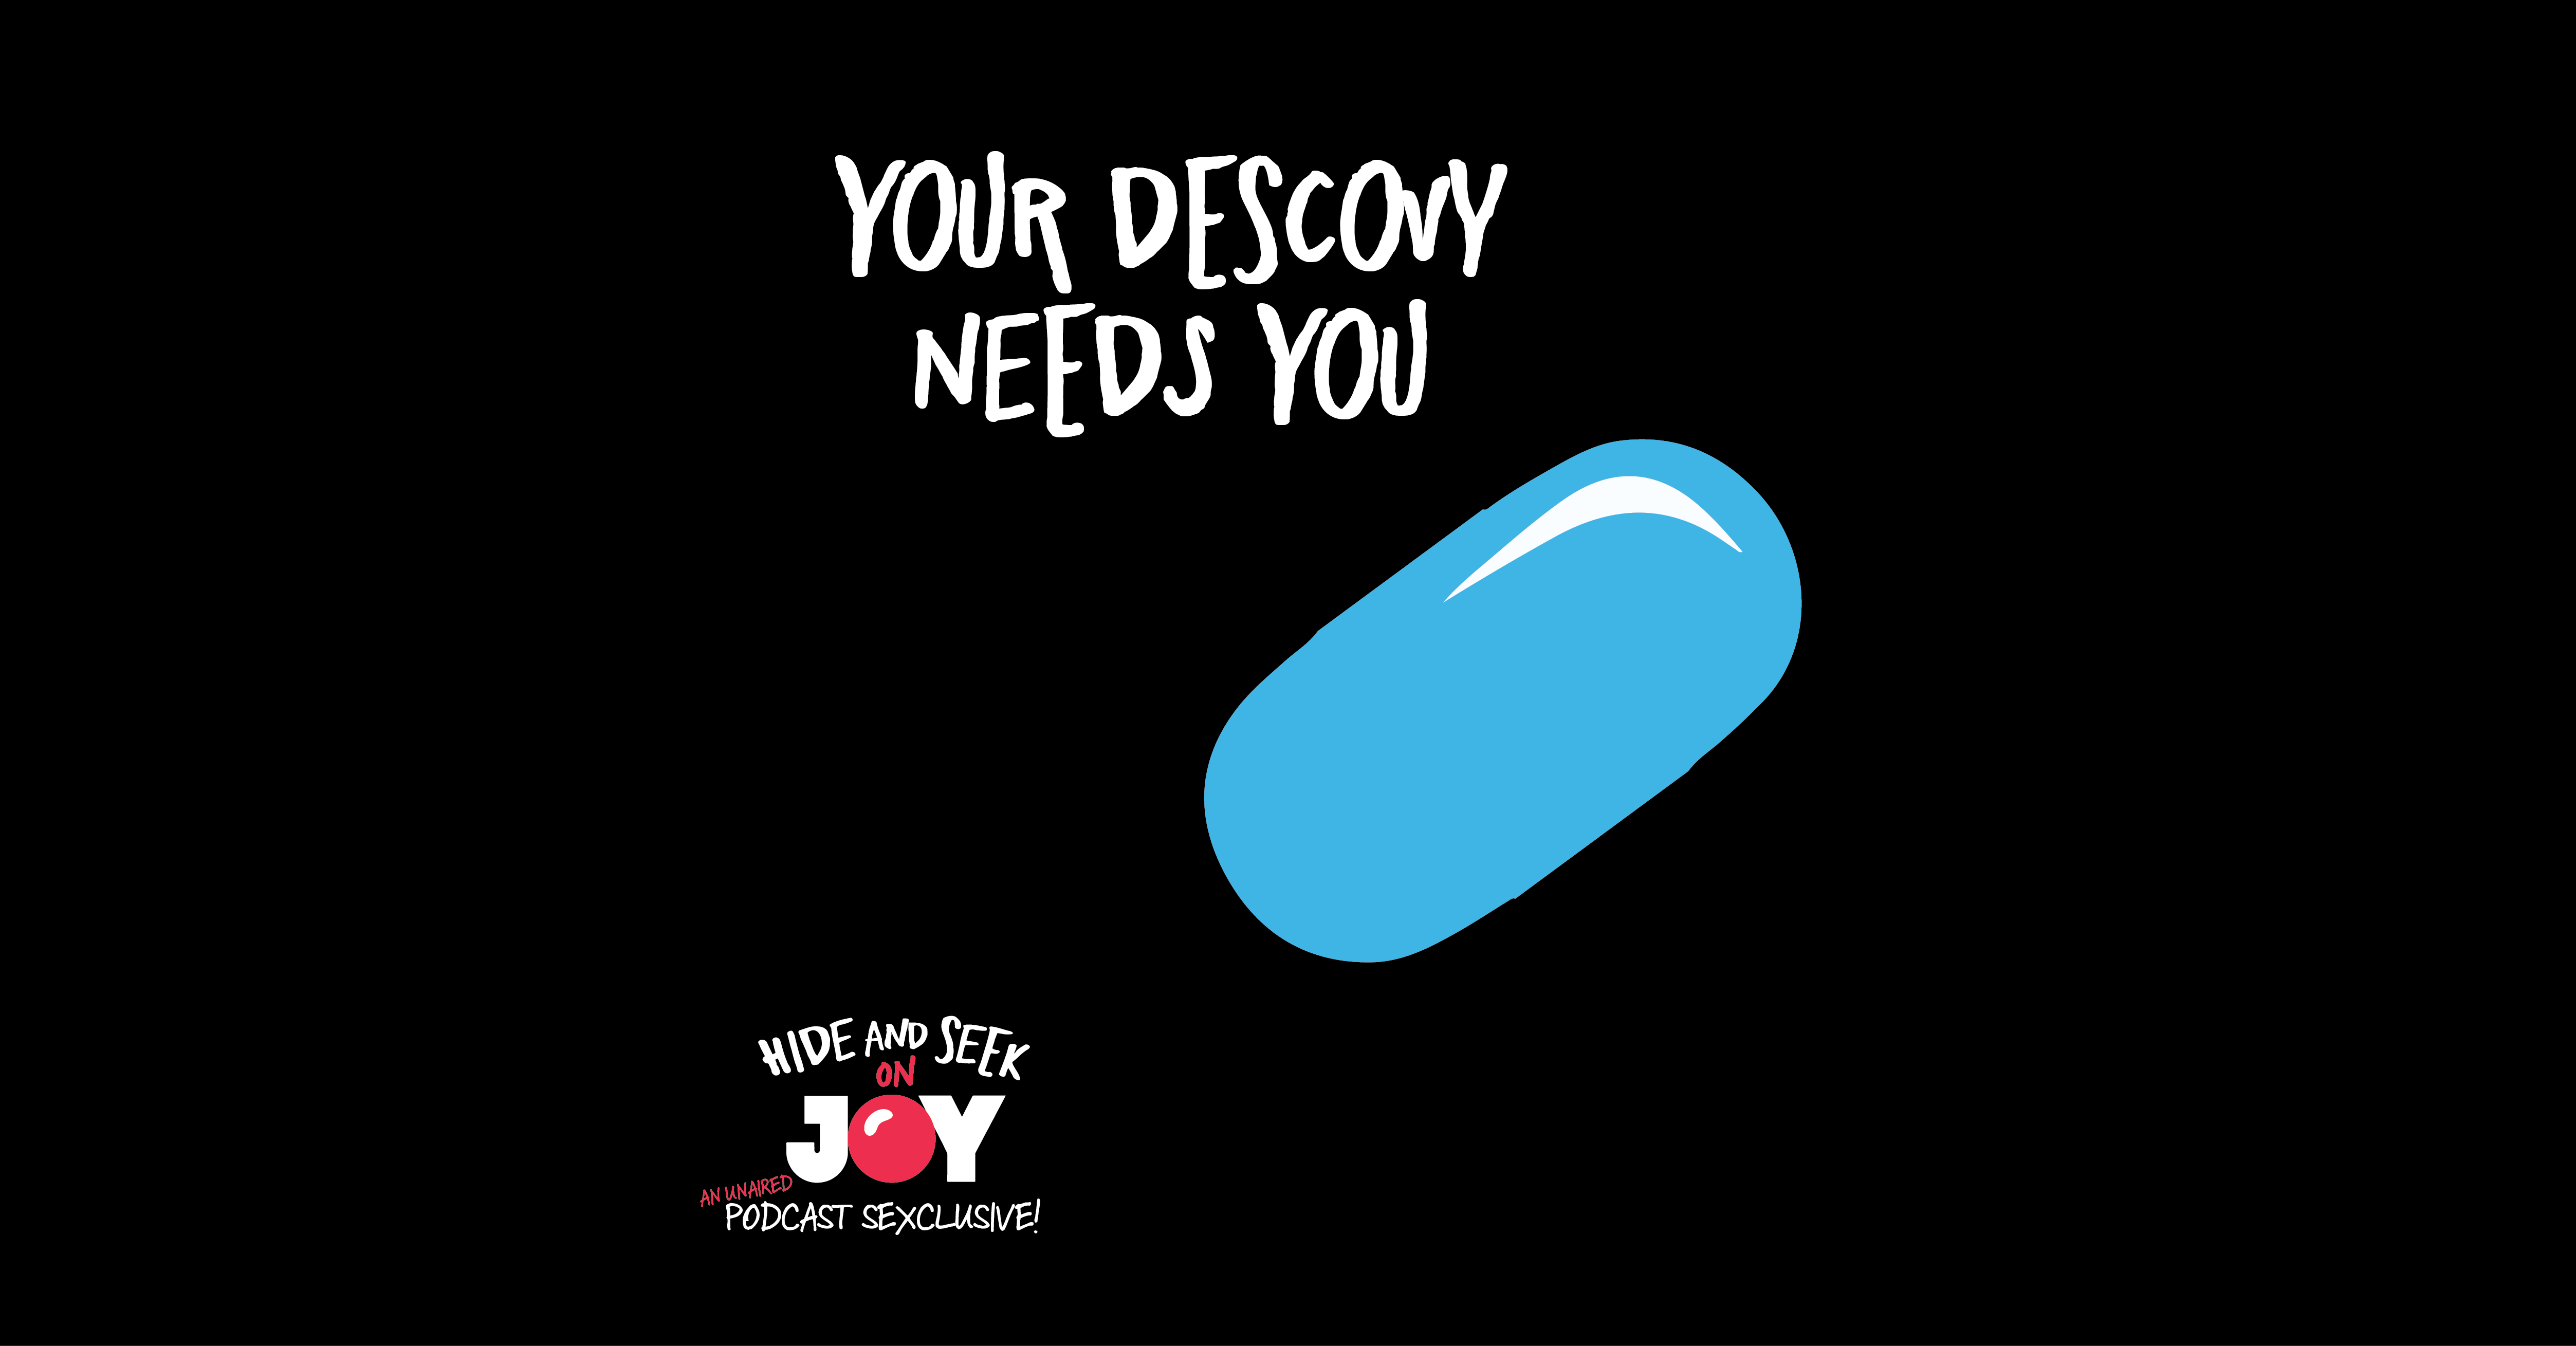 61. “Your Descovy Needs You” – Descovy Sexclusive